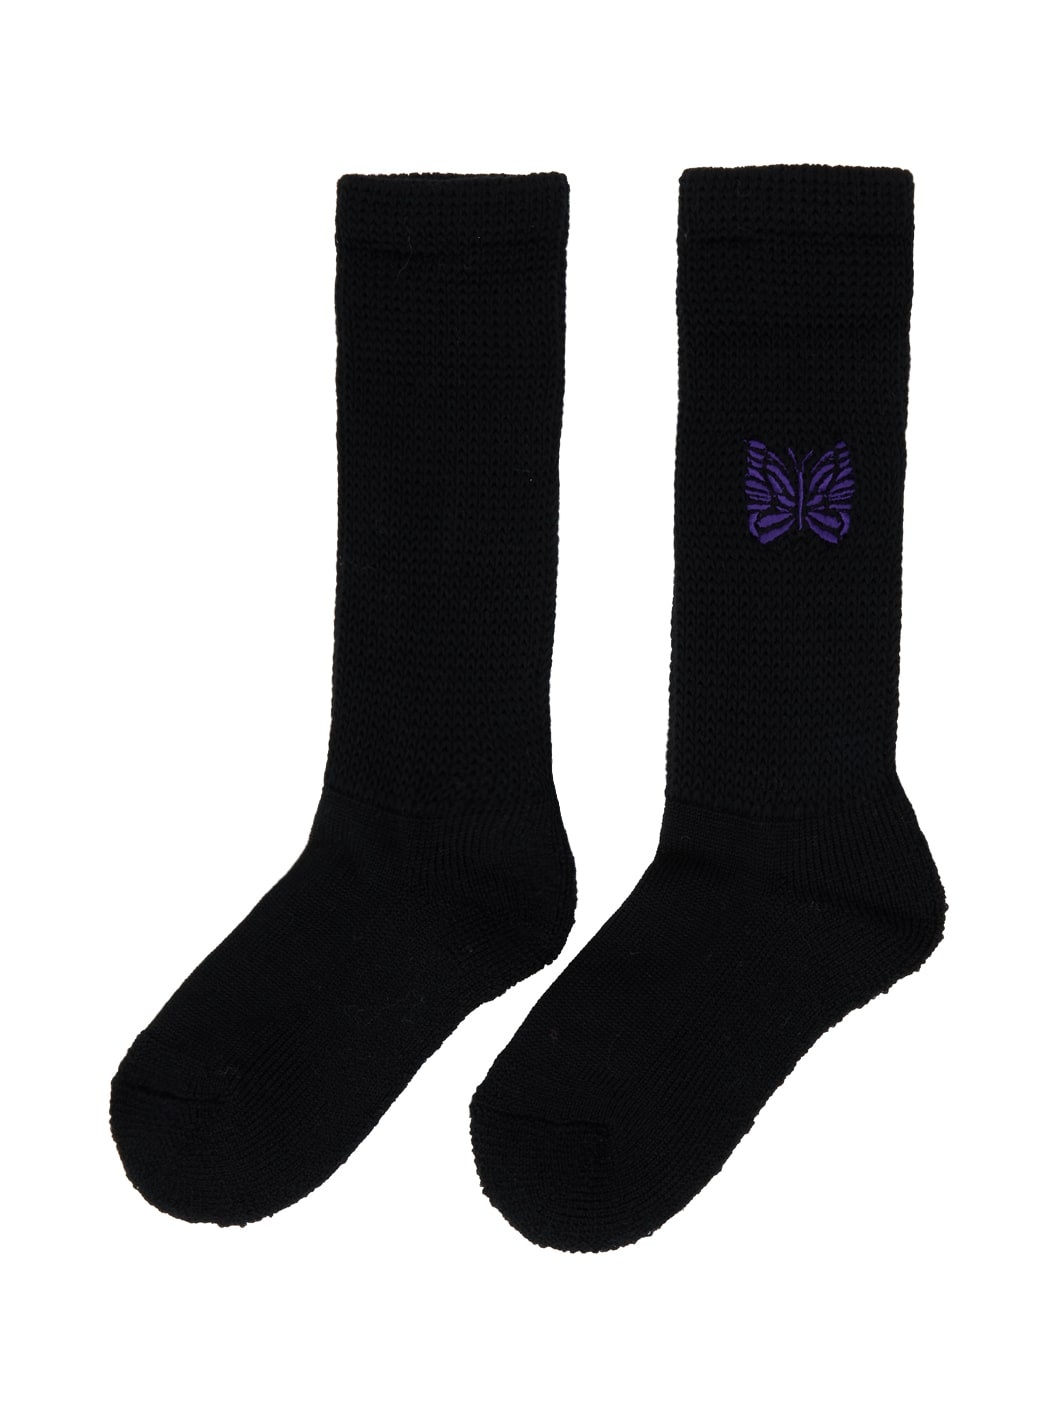 Black Pile Socks - 2